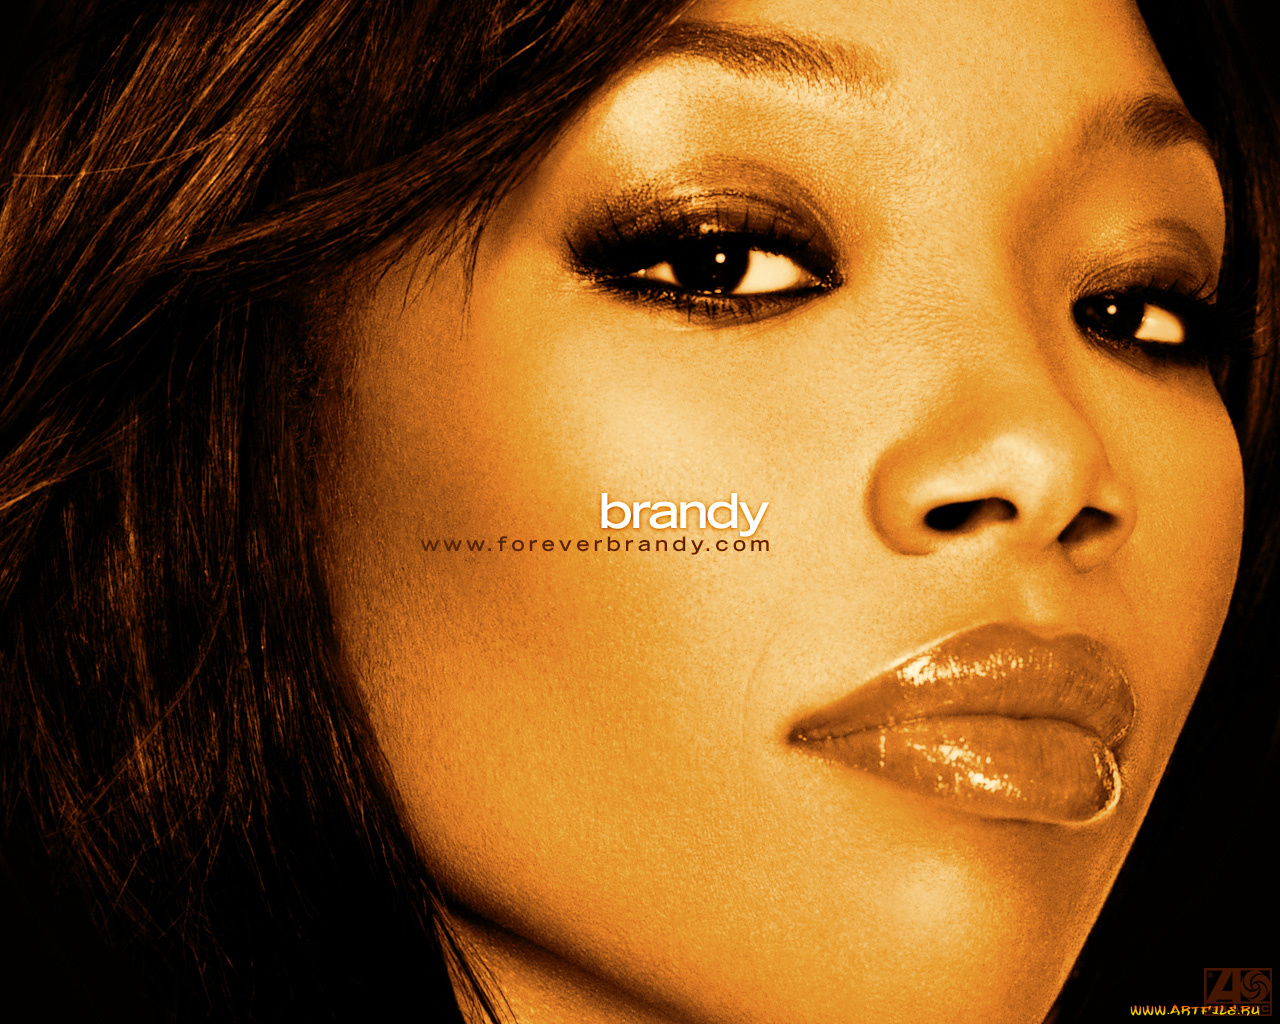 brandy, музыка